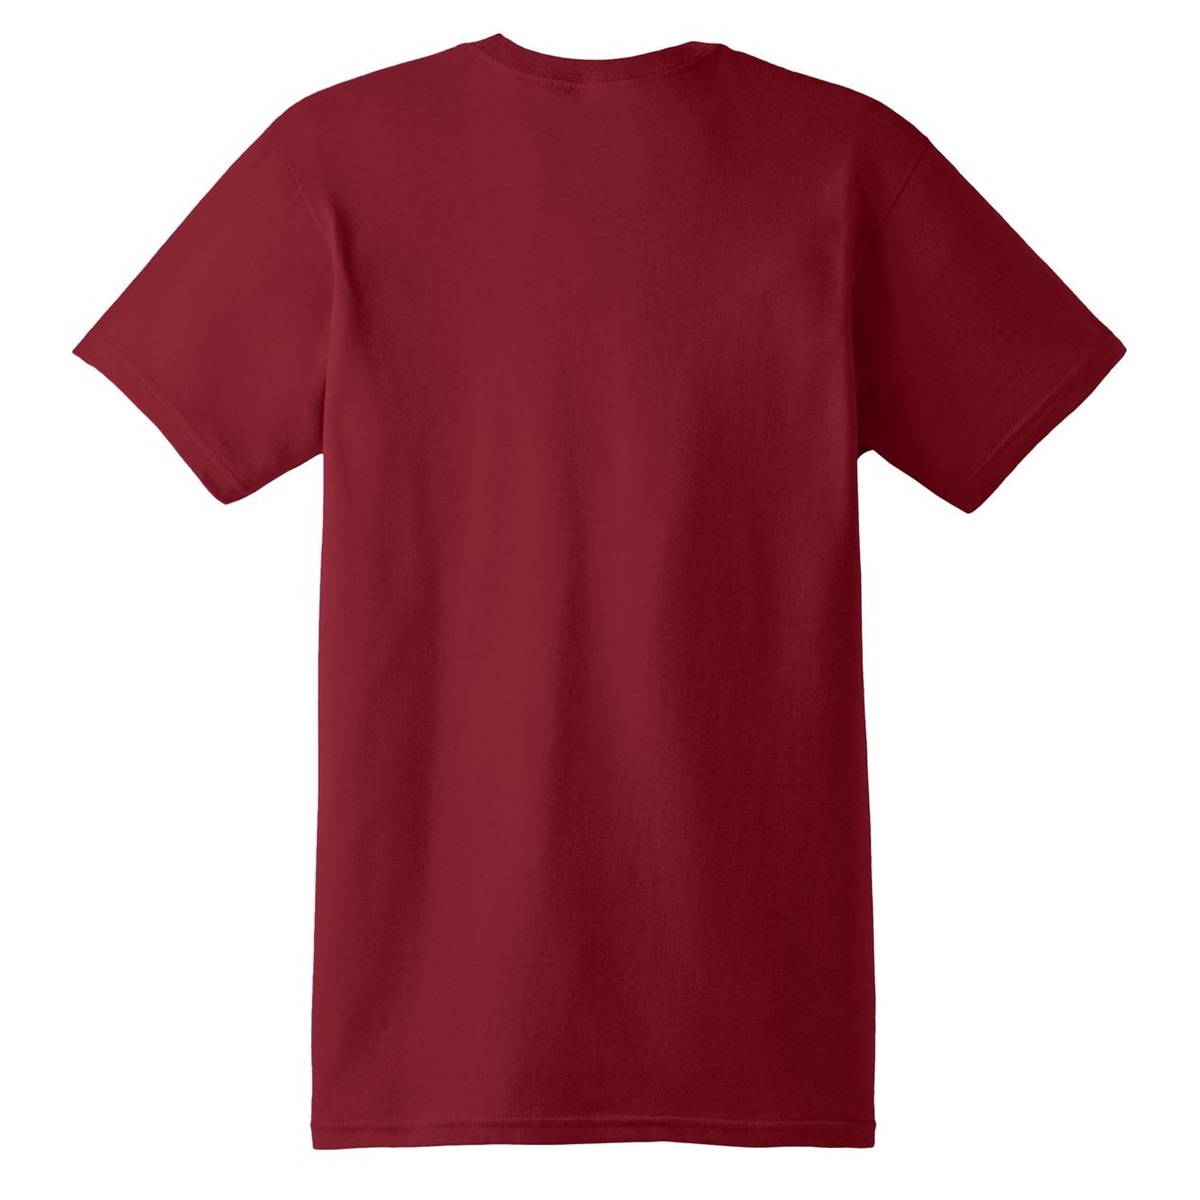 Vintage Red T Shirt 55